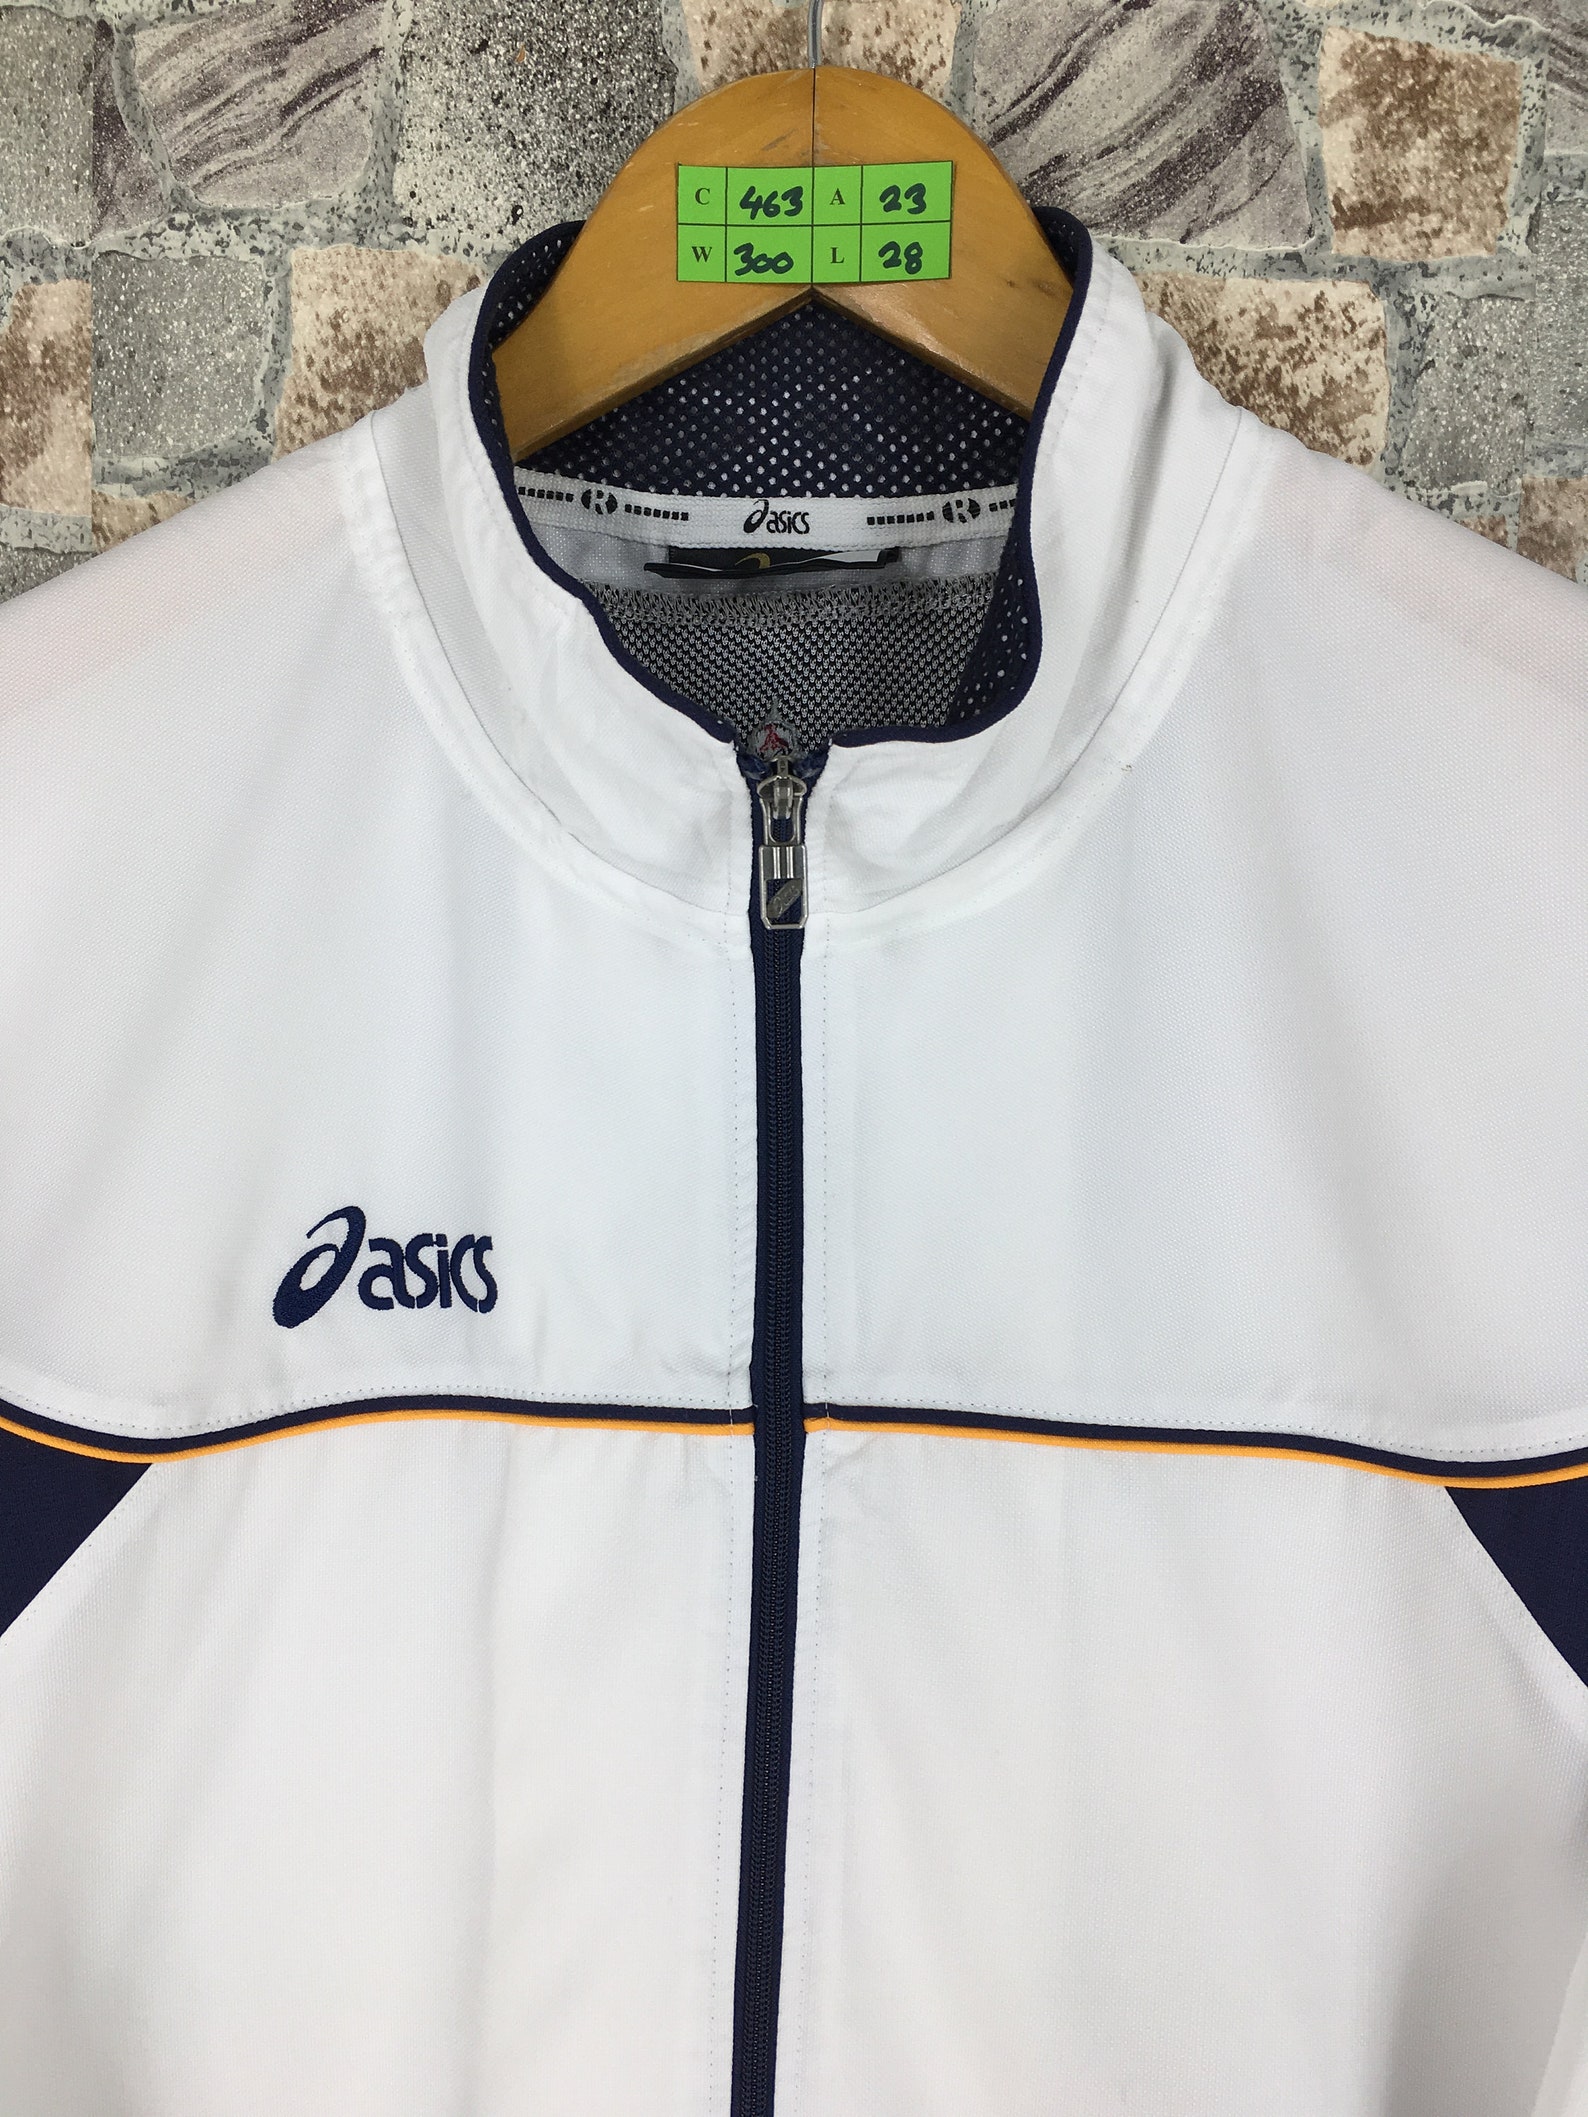 Asics Japan Track Top Jacket Medium Vintage 90s Asics Football | Etsy